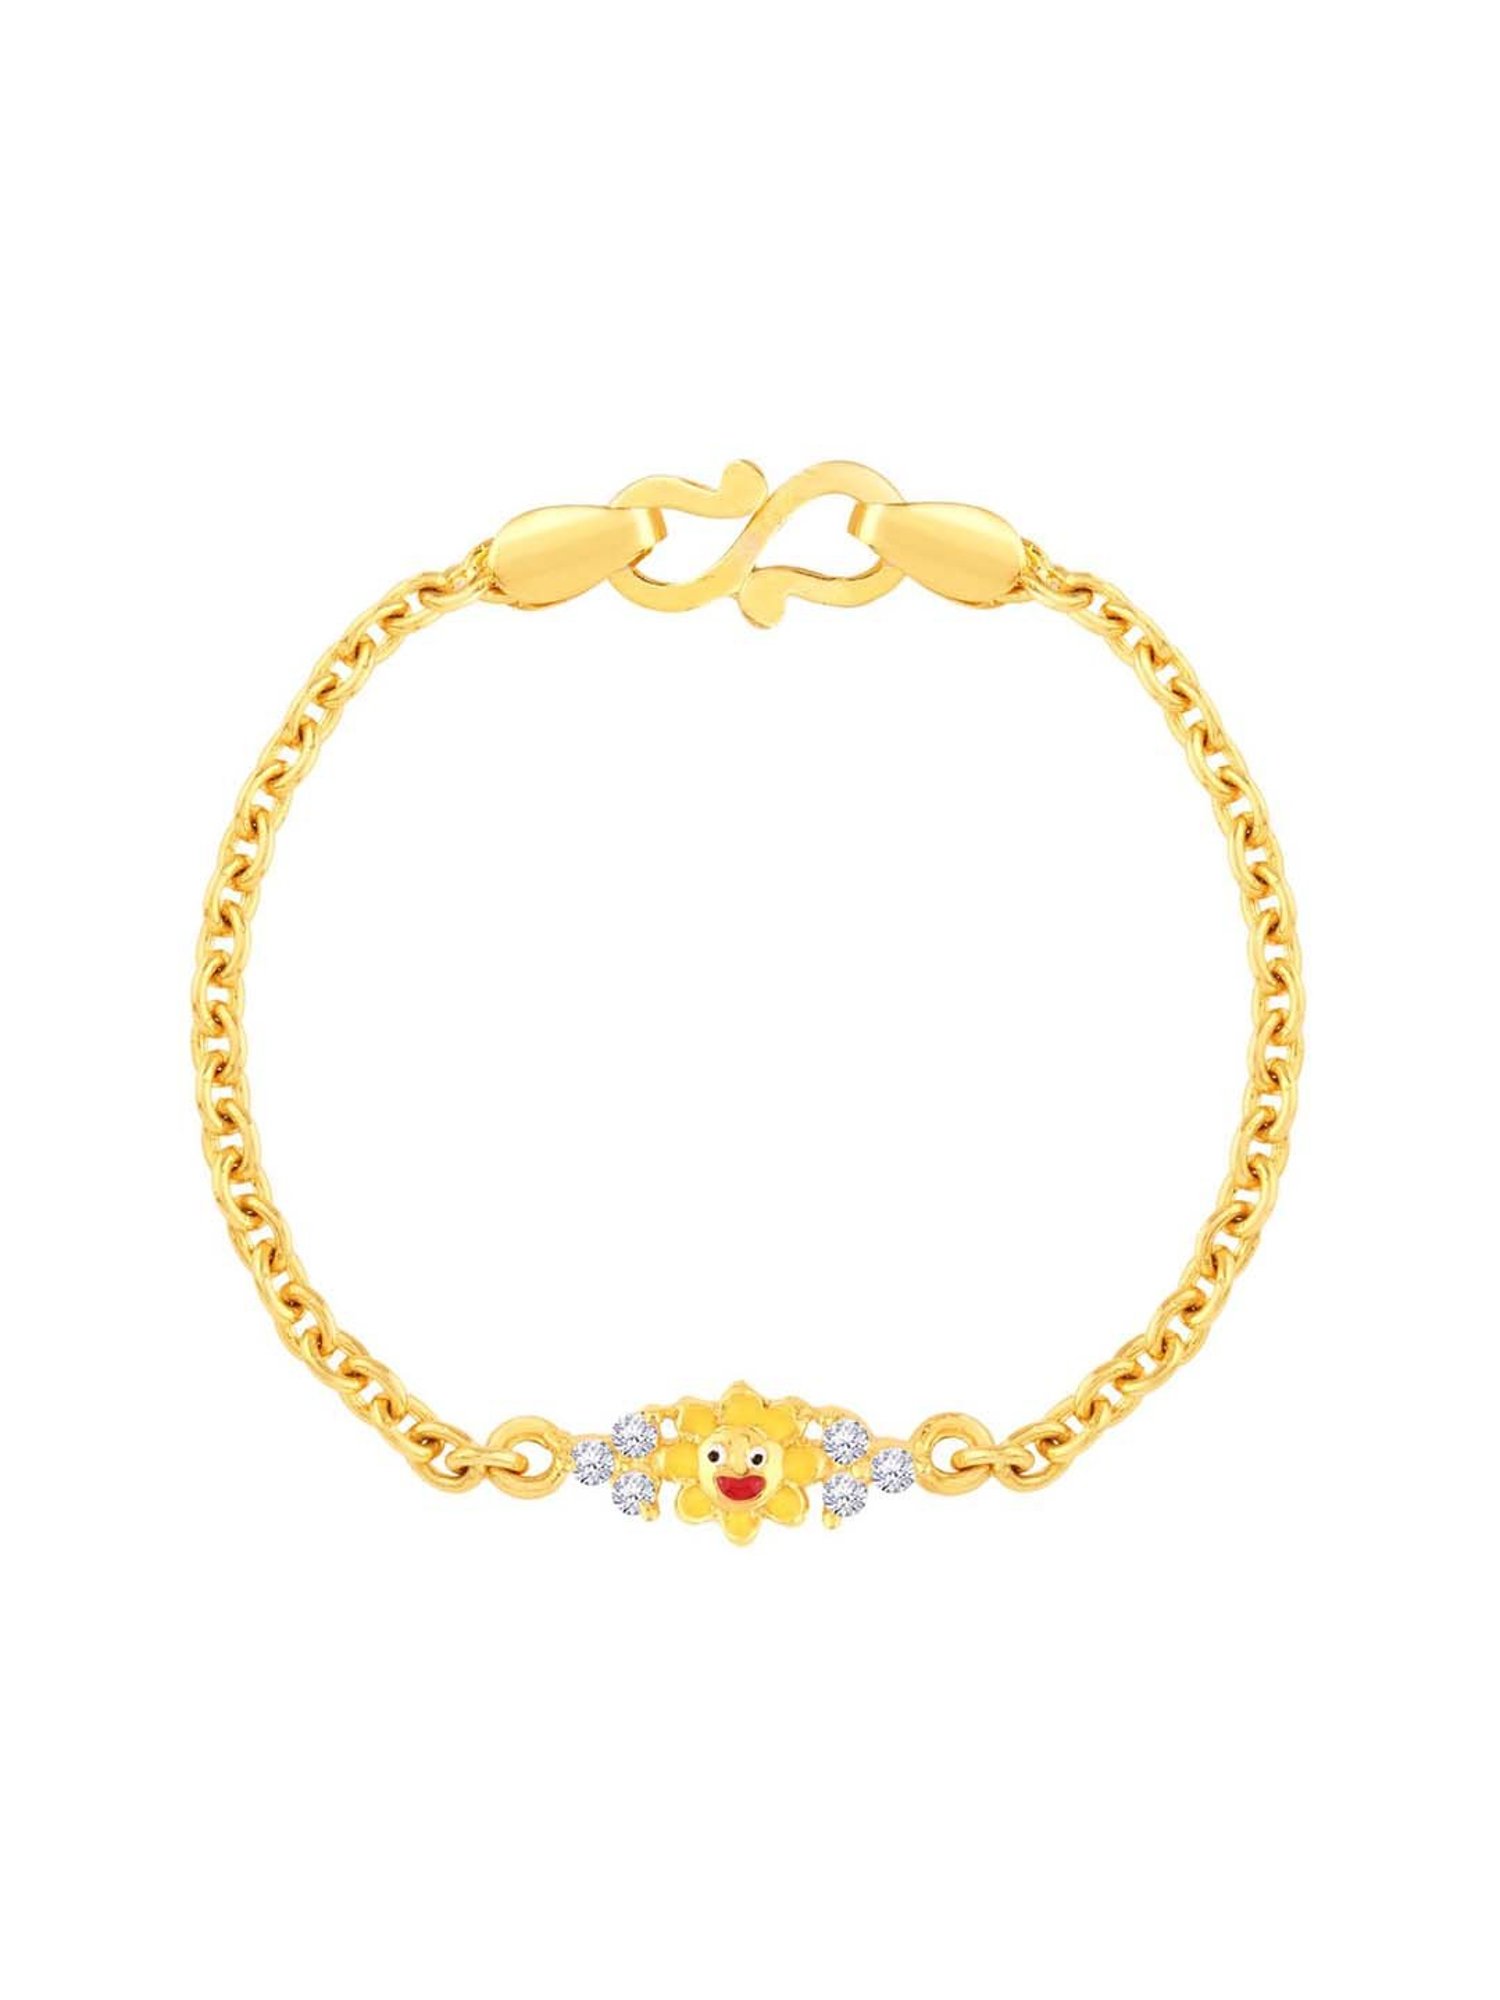 Malabar 22 KT Gold Studded Charms Bracelet BRDZSKY101 | Bridal gold  jewellery designs, Bridal gold jewellery, Gold